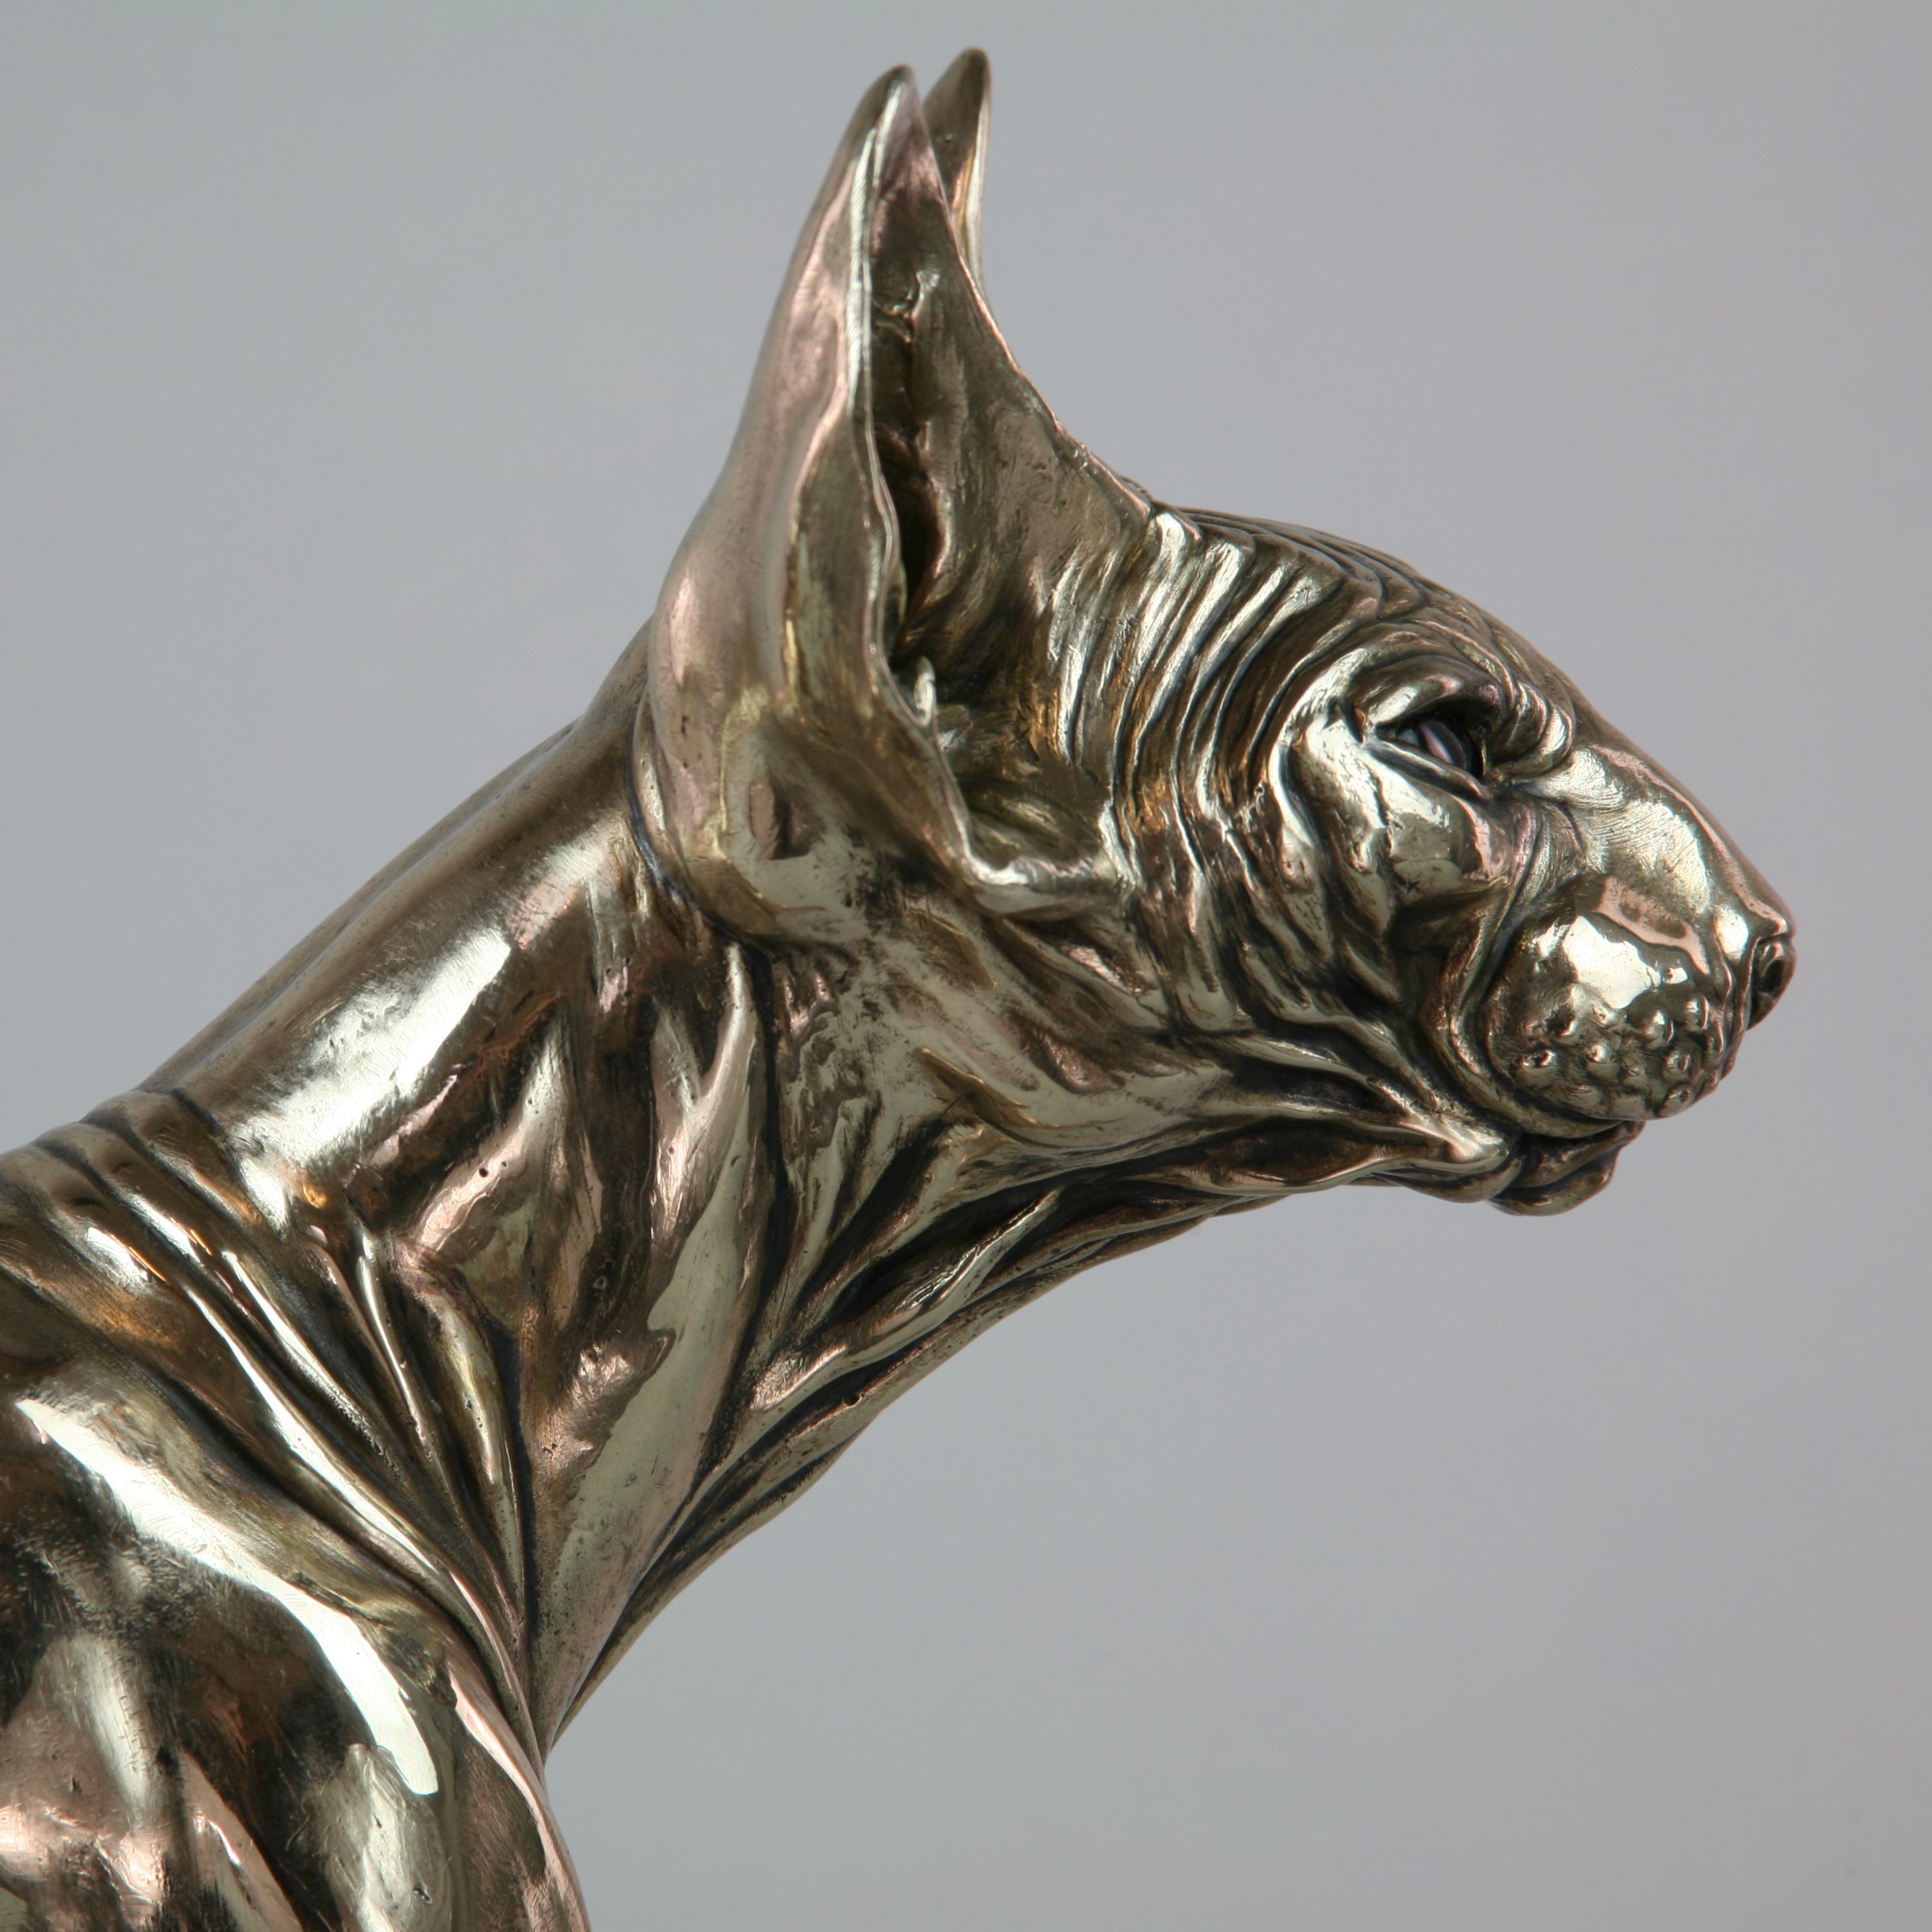 Sphynx Cat II - sculpture wildlife animal limited edition bronze modern marine - Sculpture by Andrzej Szymczyk